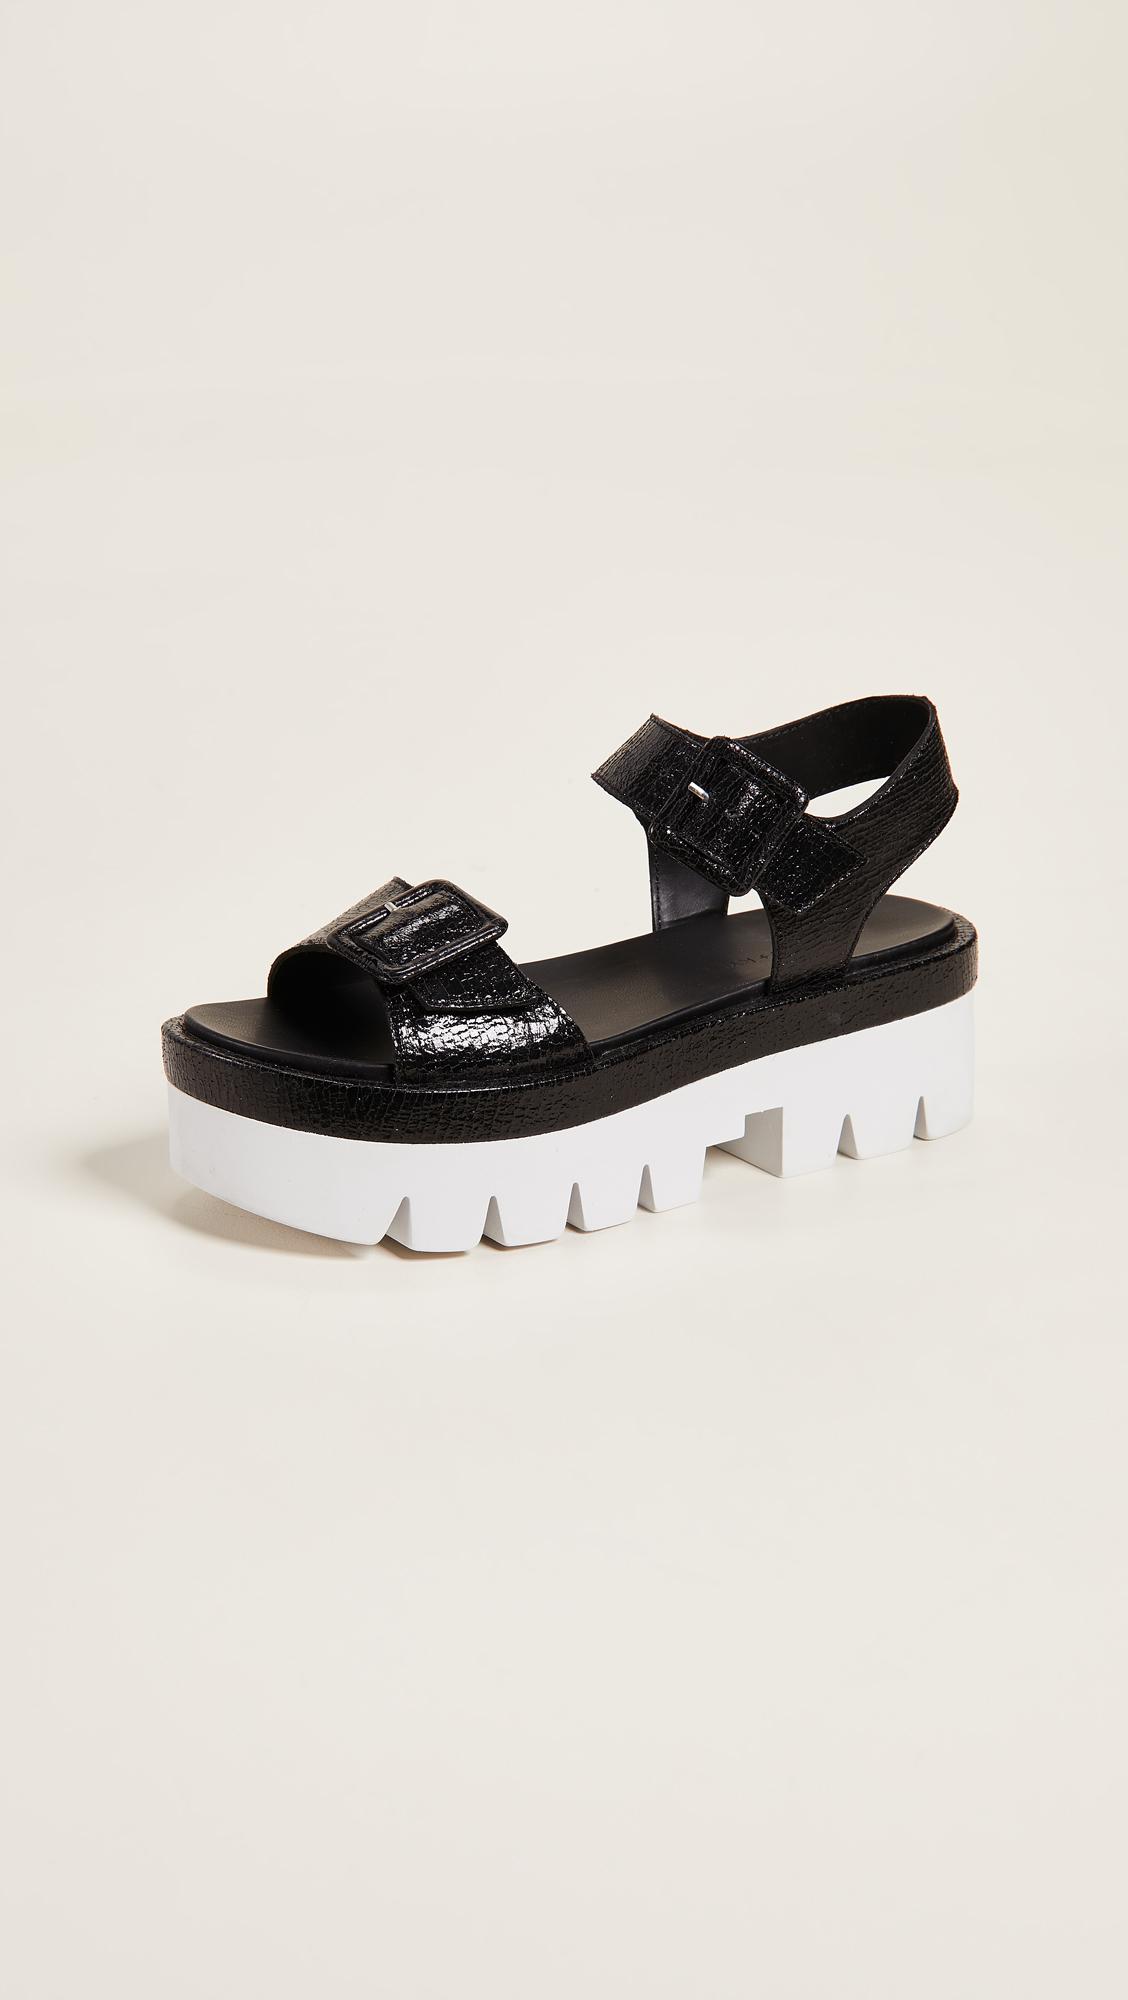 Kendall + Kylie Leather Wave Platform Sandals in Black - Lyst